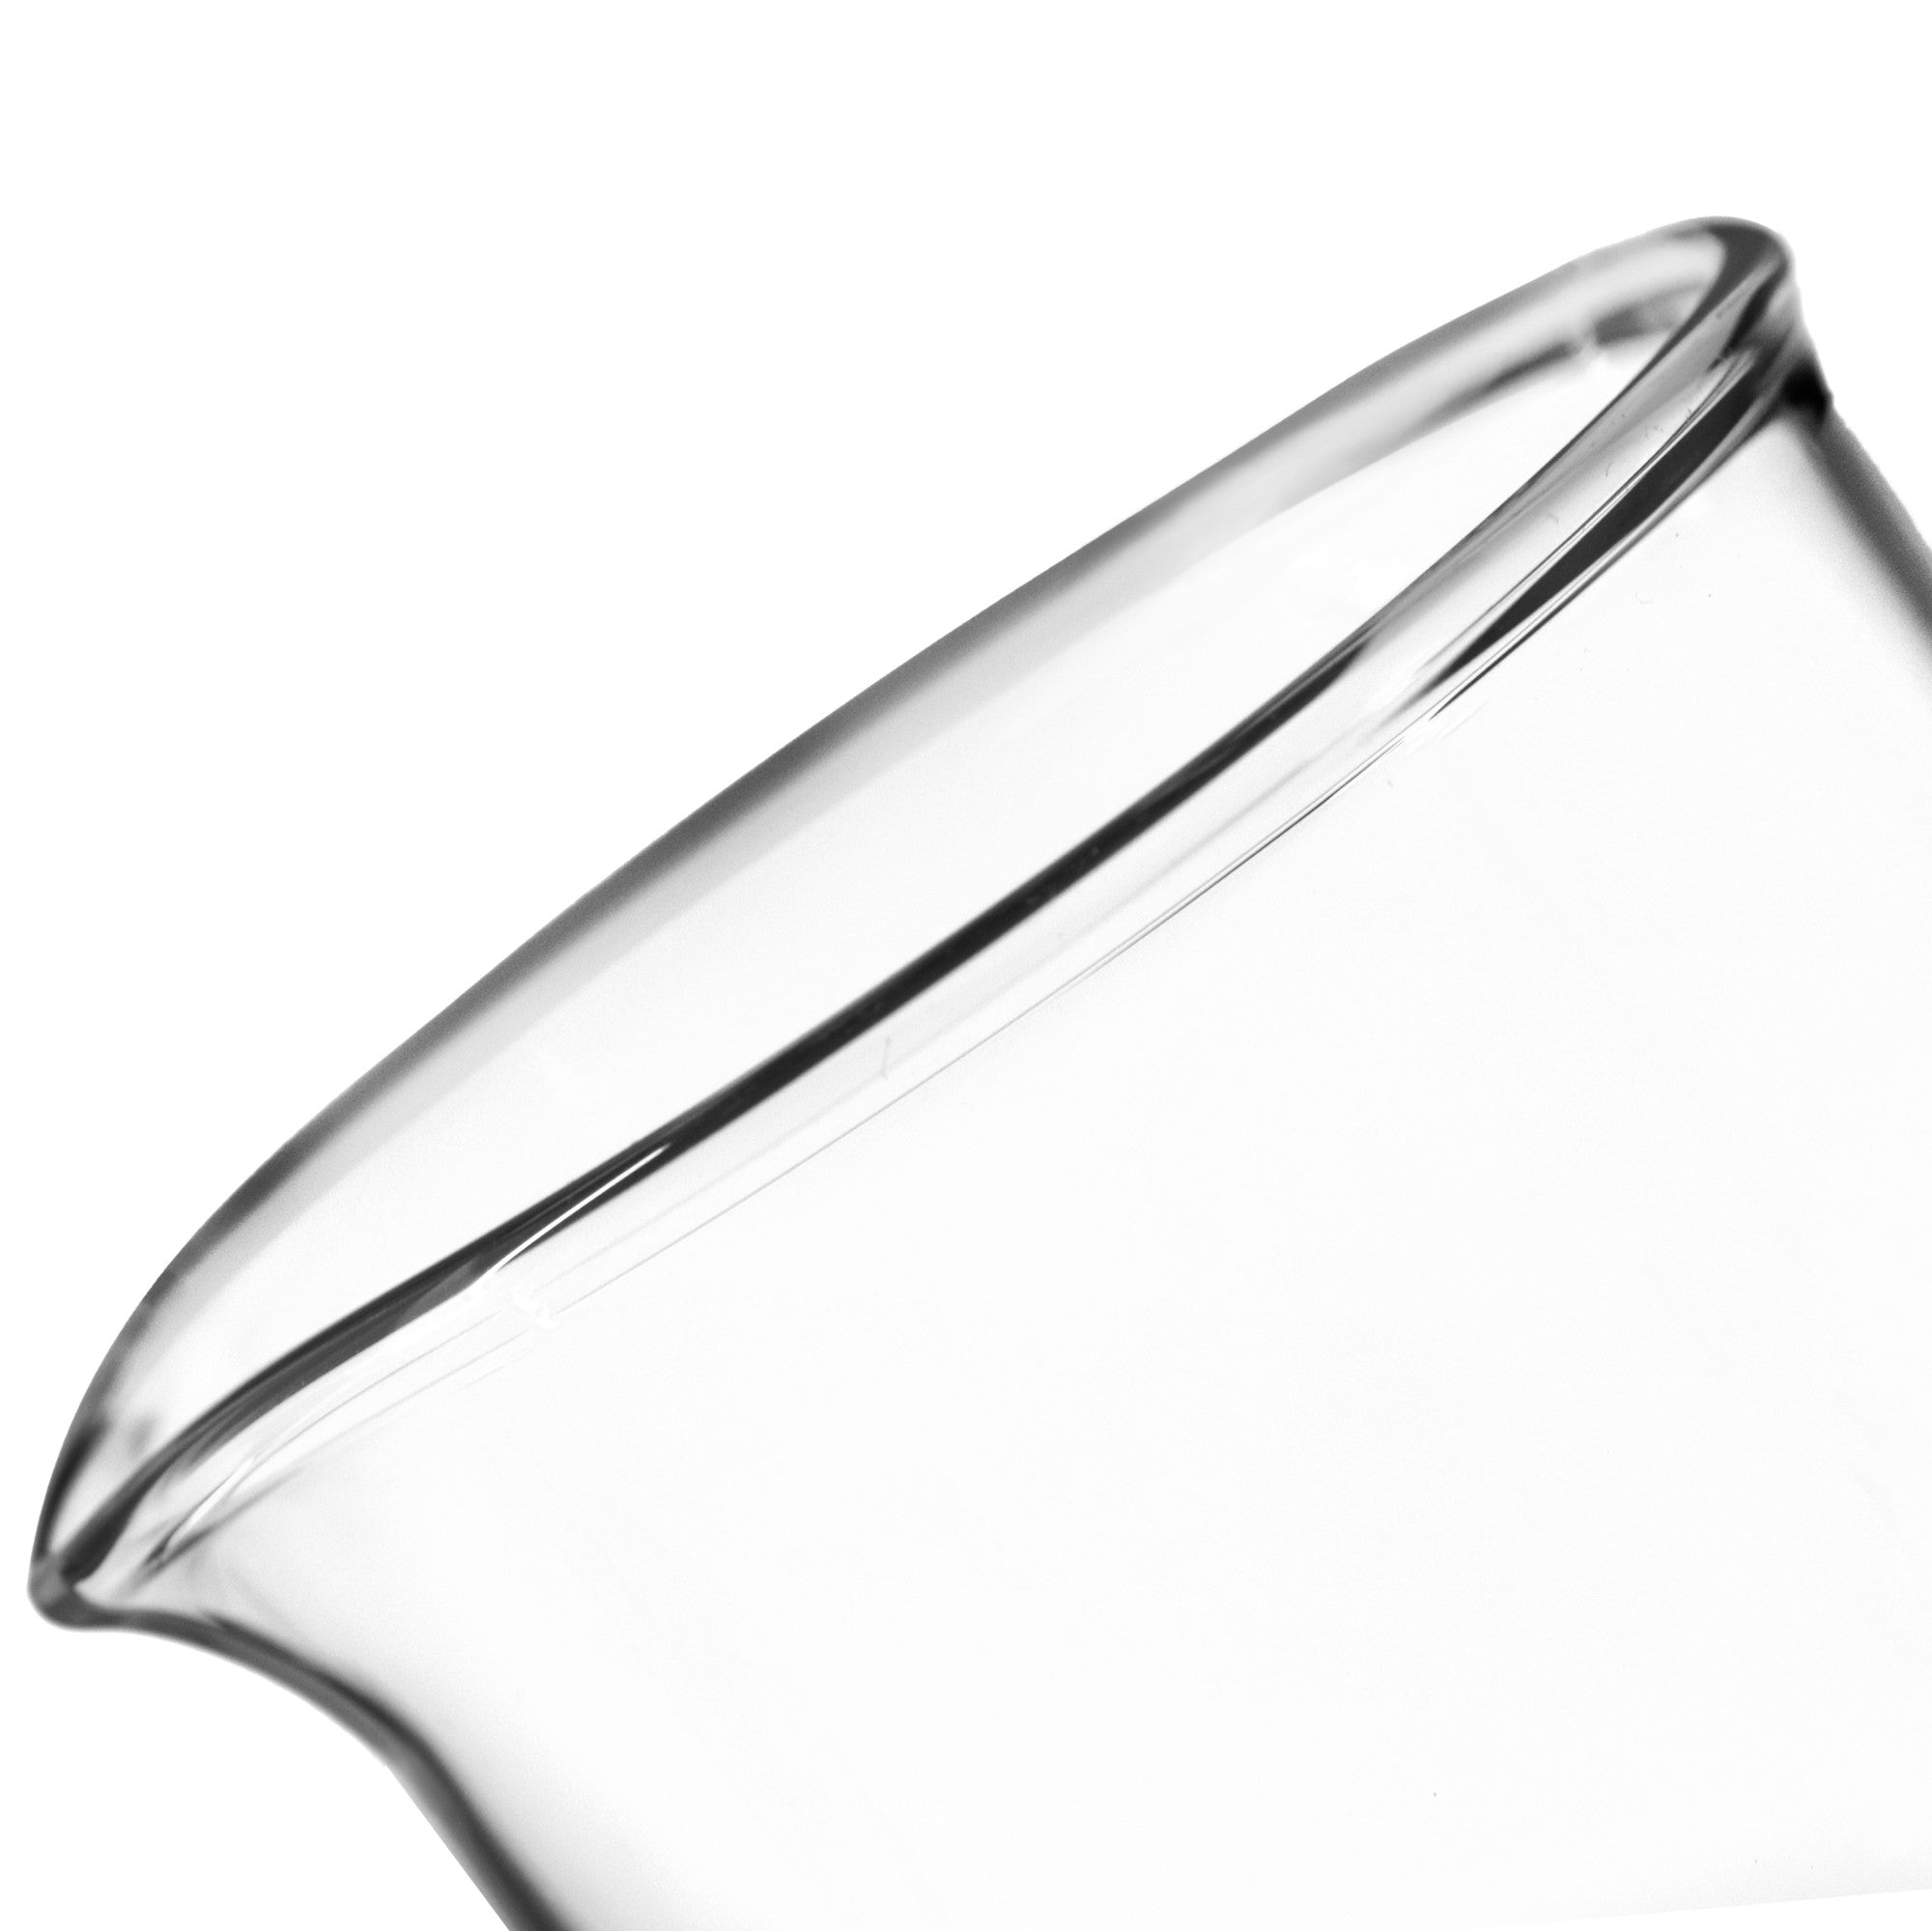 Borosilicate Low Form Beaker, 600ml, 50ml Graduation, Autoclavable